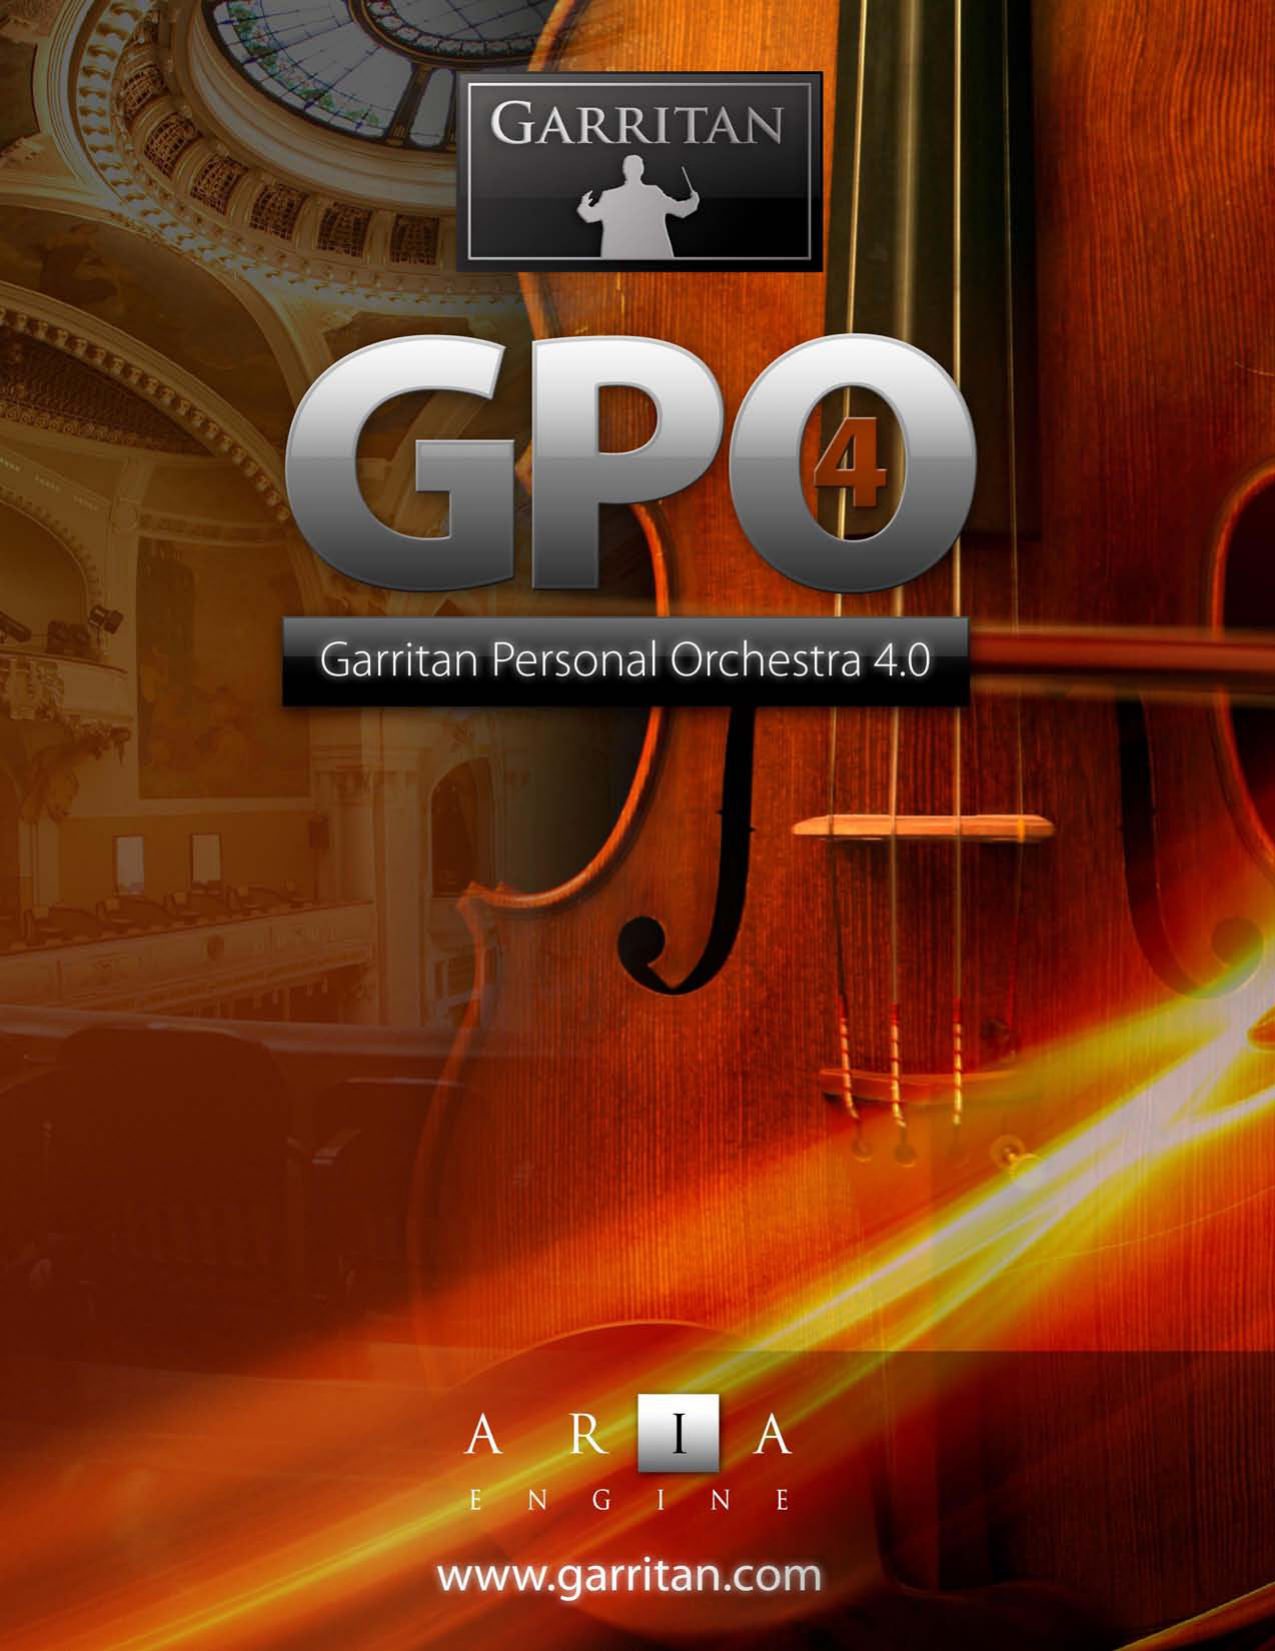 garritan personal orchestra 5 strings review